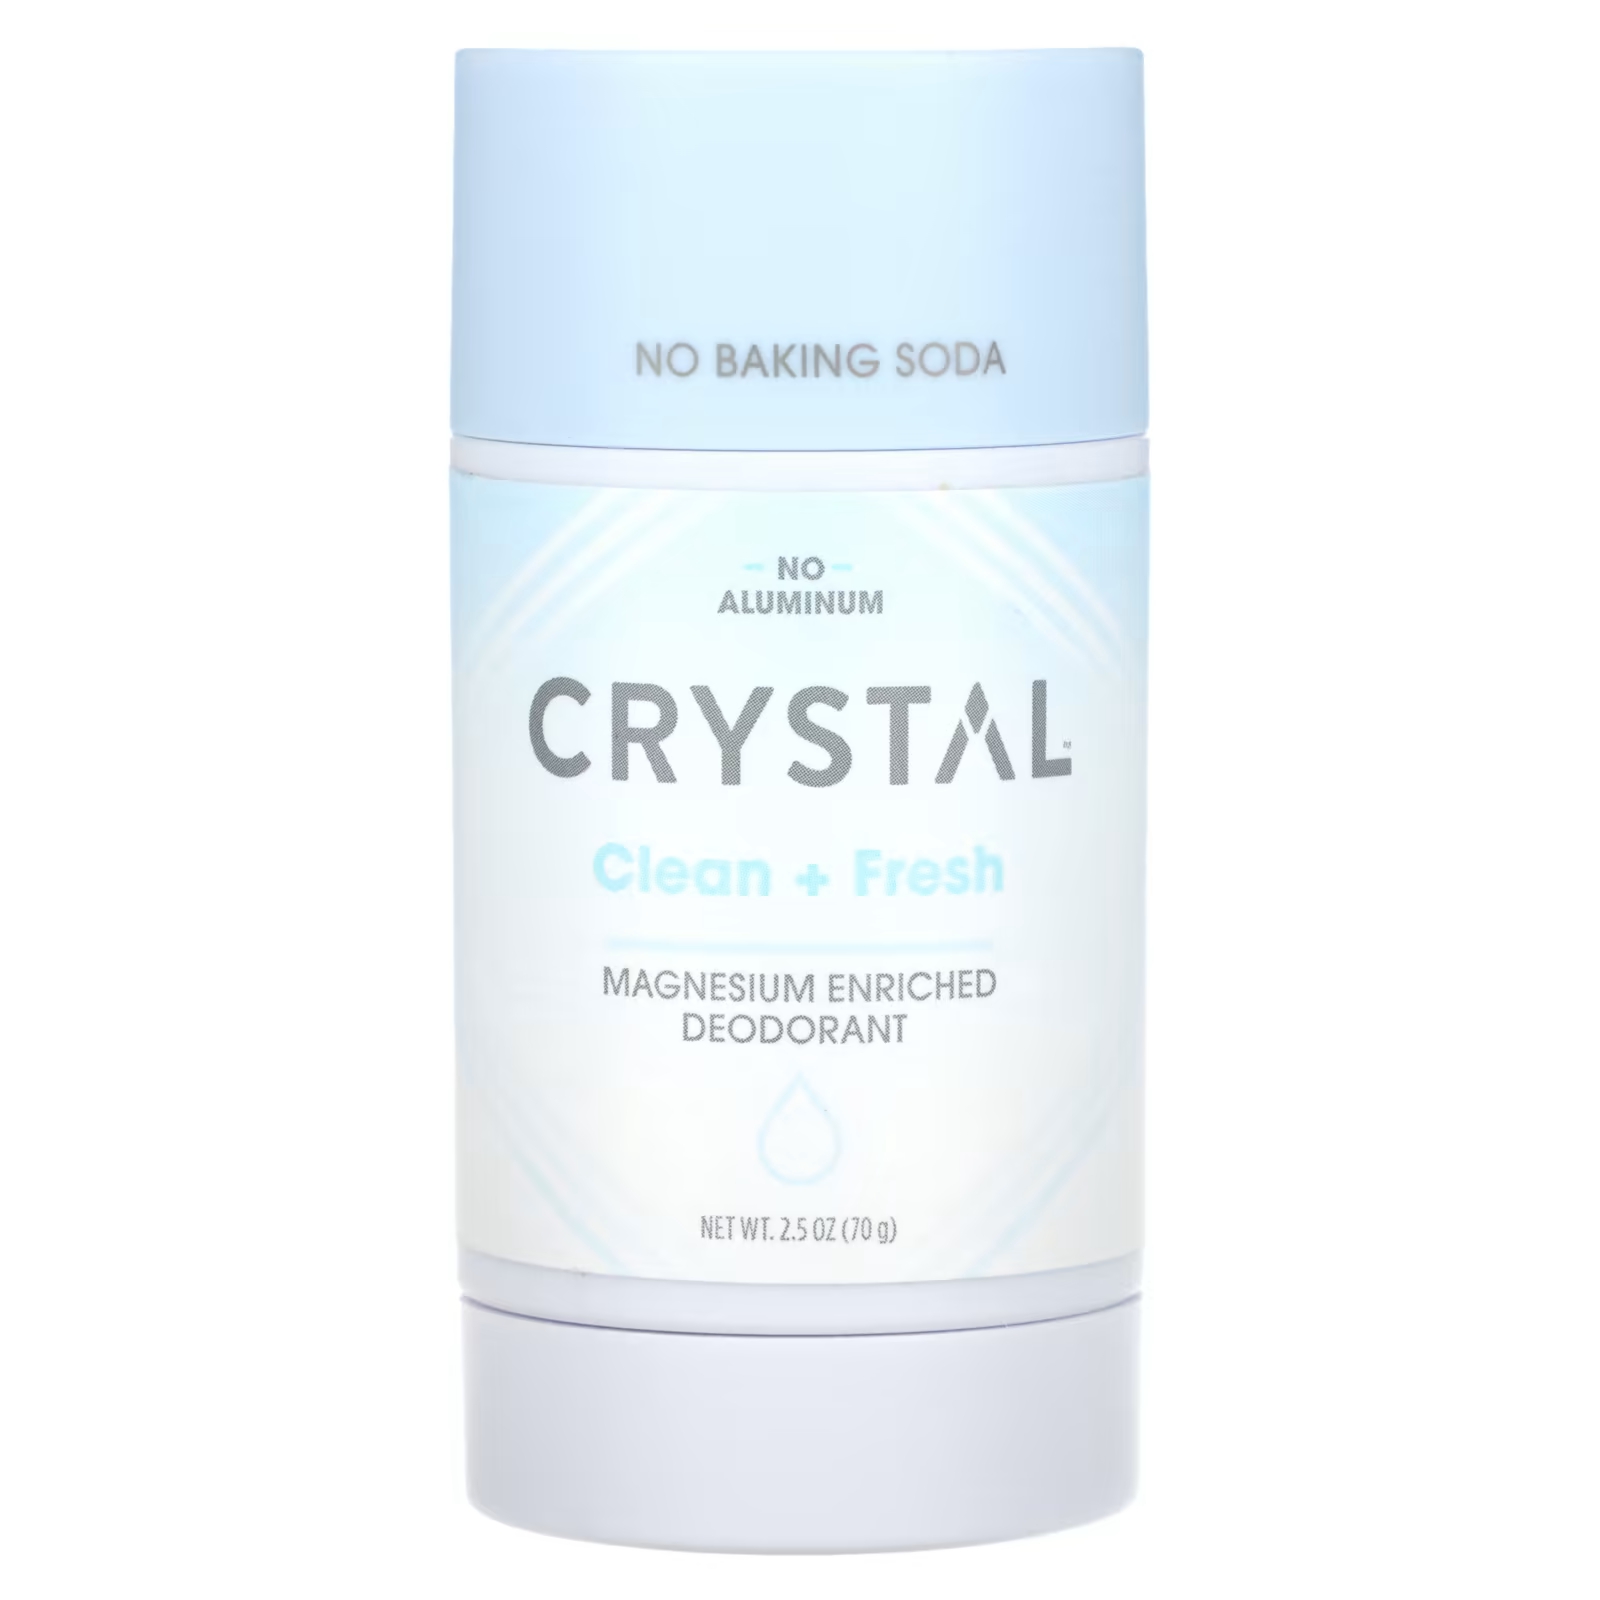 Дезодорант Crystal Clean + Fresh обогащенный магнием, 70 г crystal обогащенный магнием дезодорант легкий и мягкий 70 г 2 5 унции